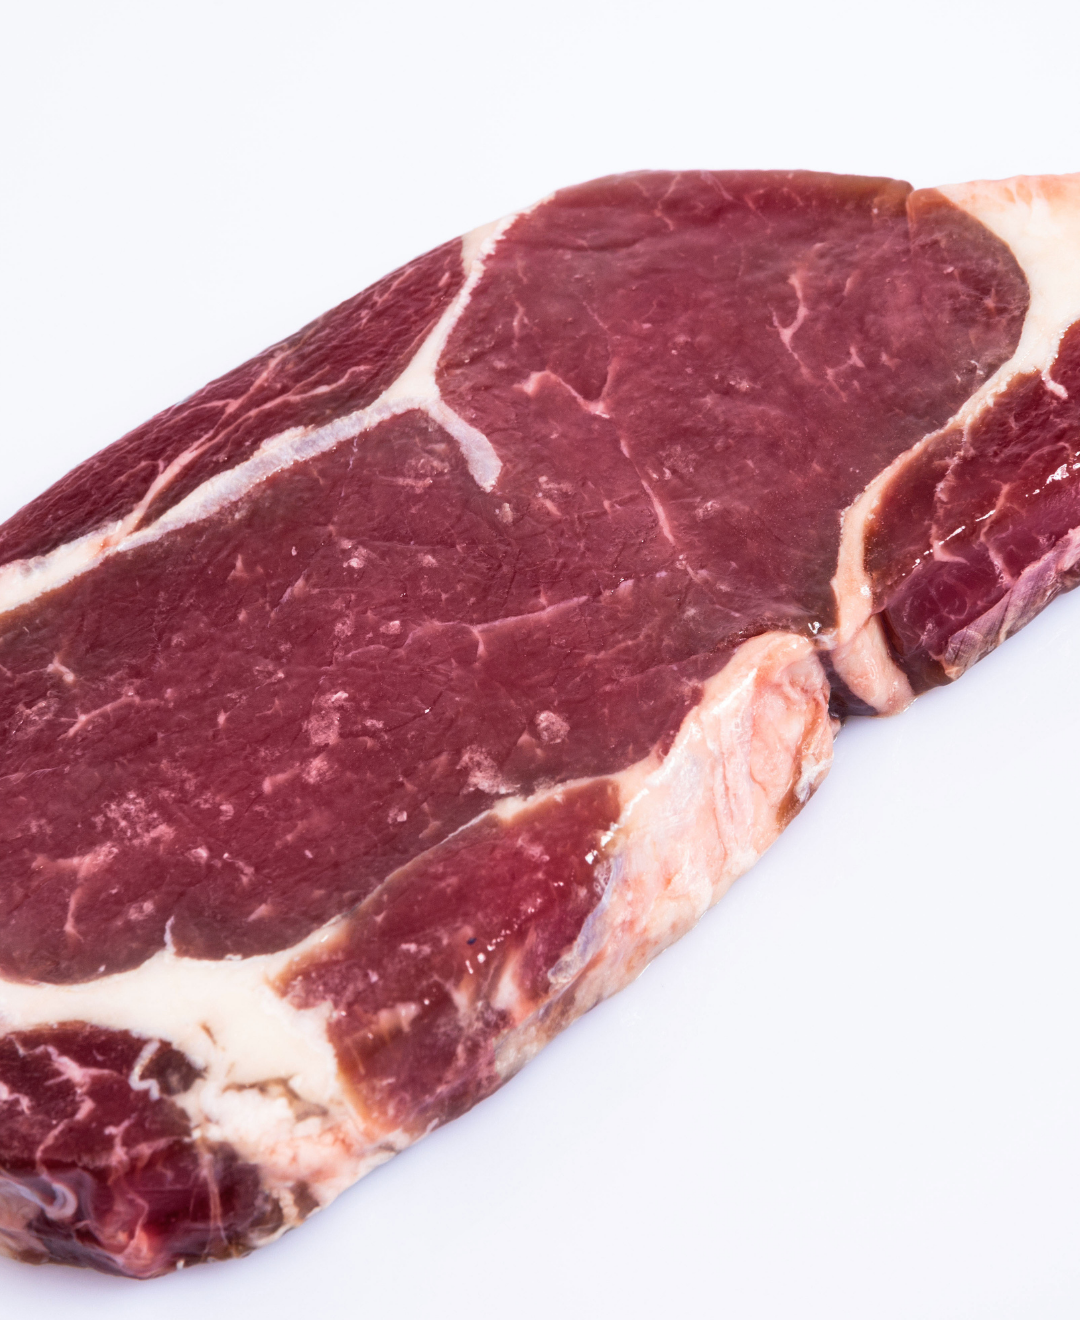 USDA Ribeye Butter-Aged Steak 1 kg (1/2" per cut, 5 slices)